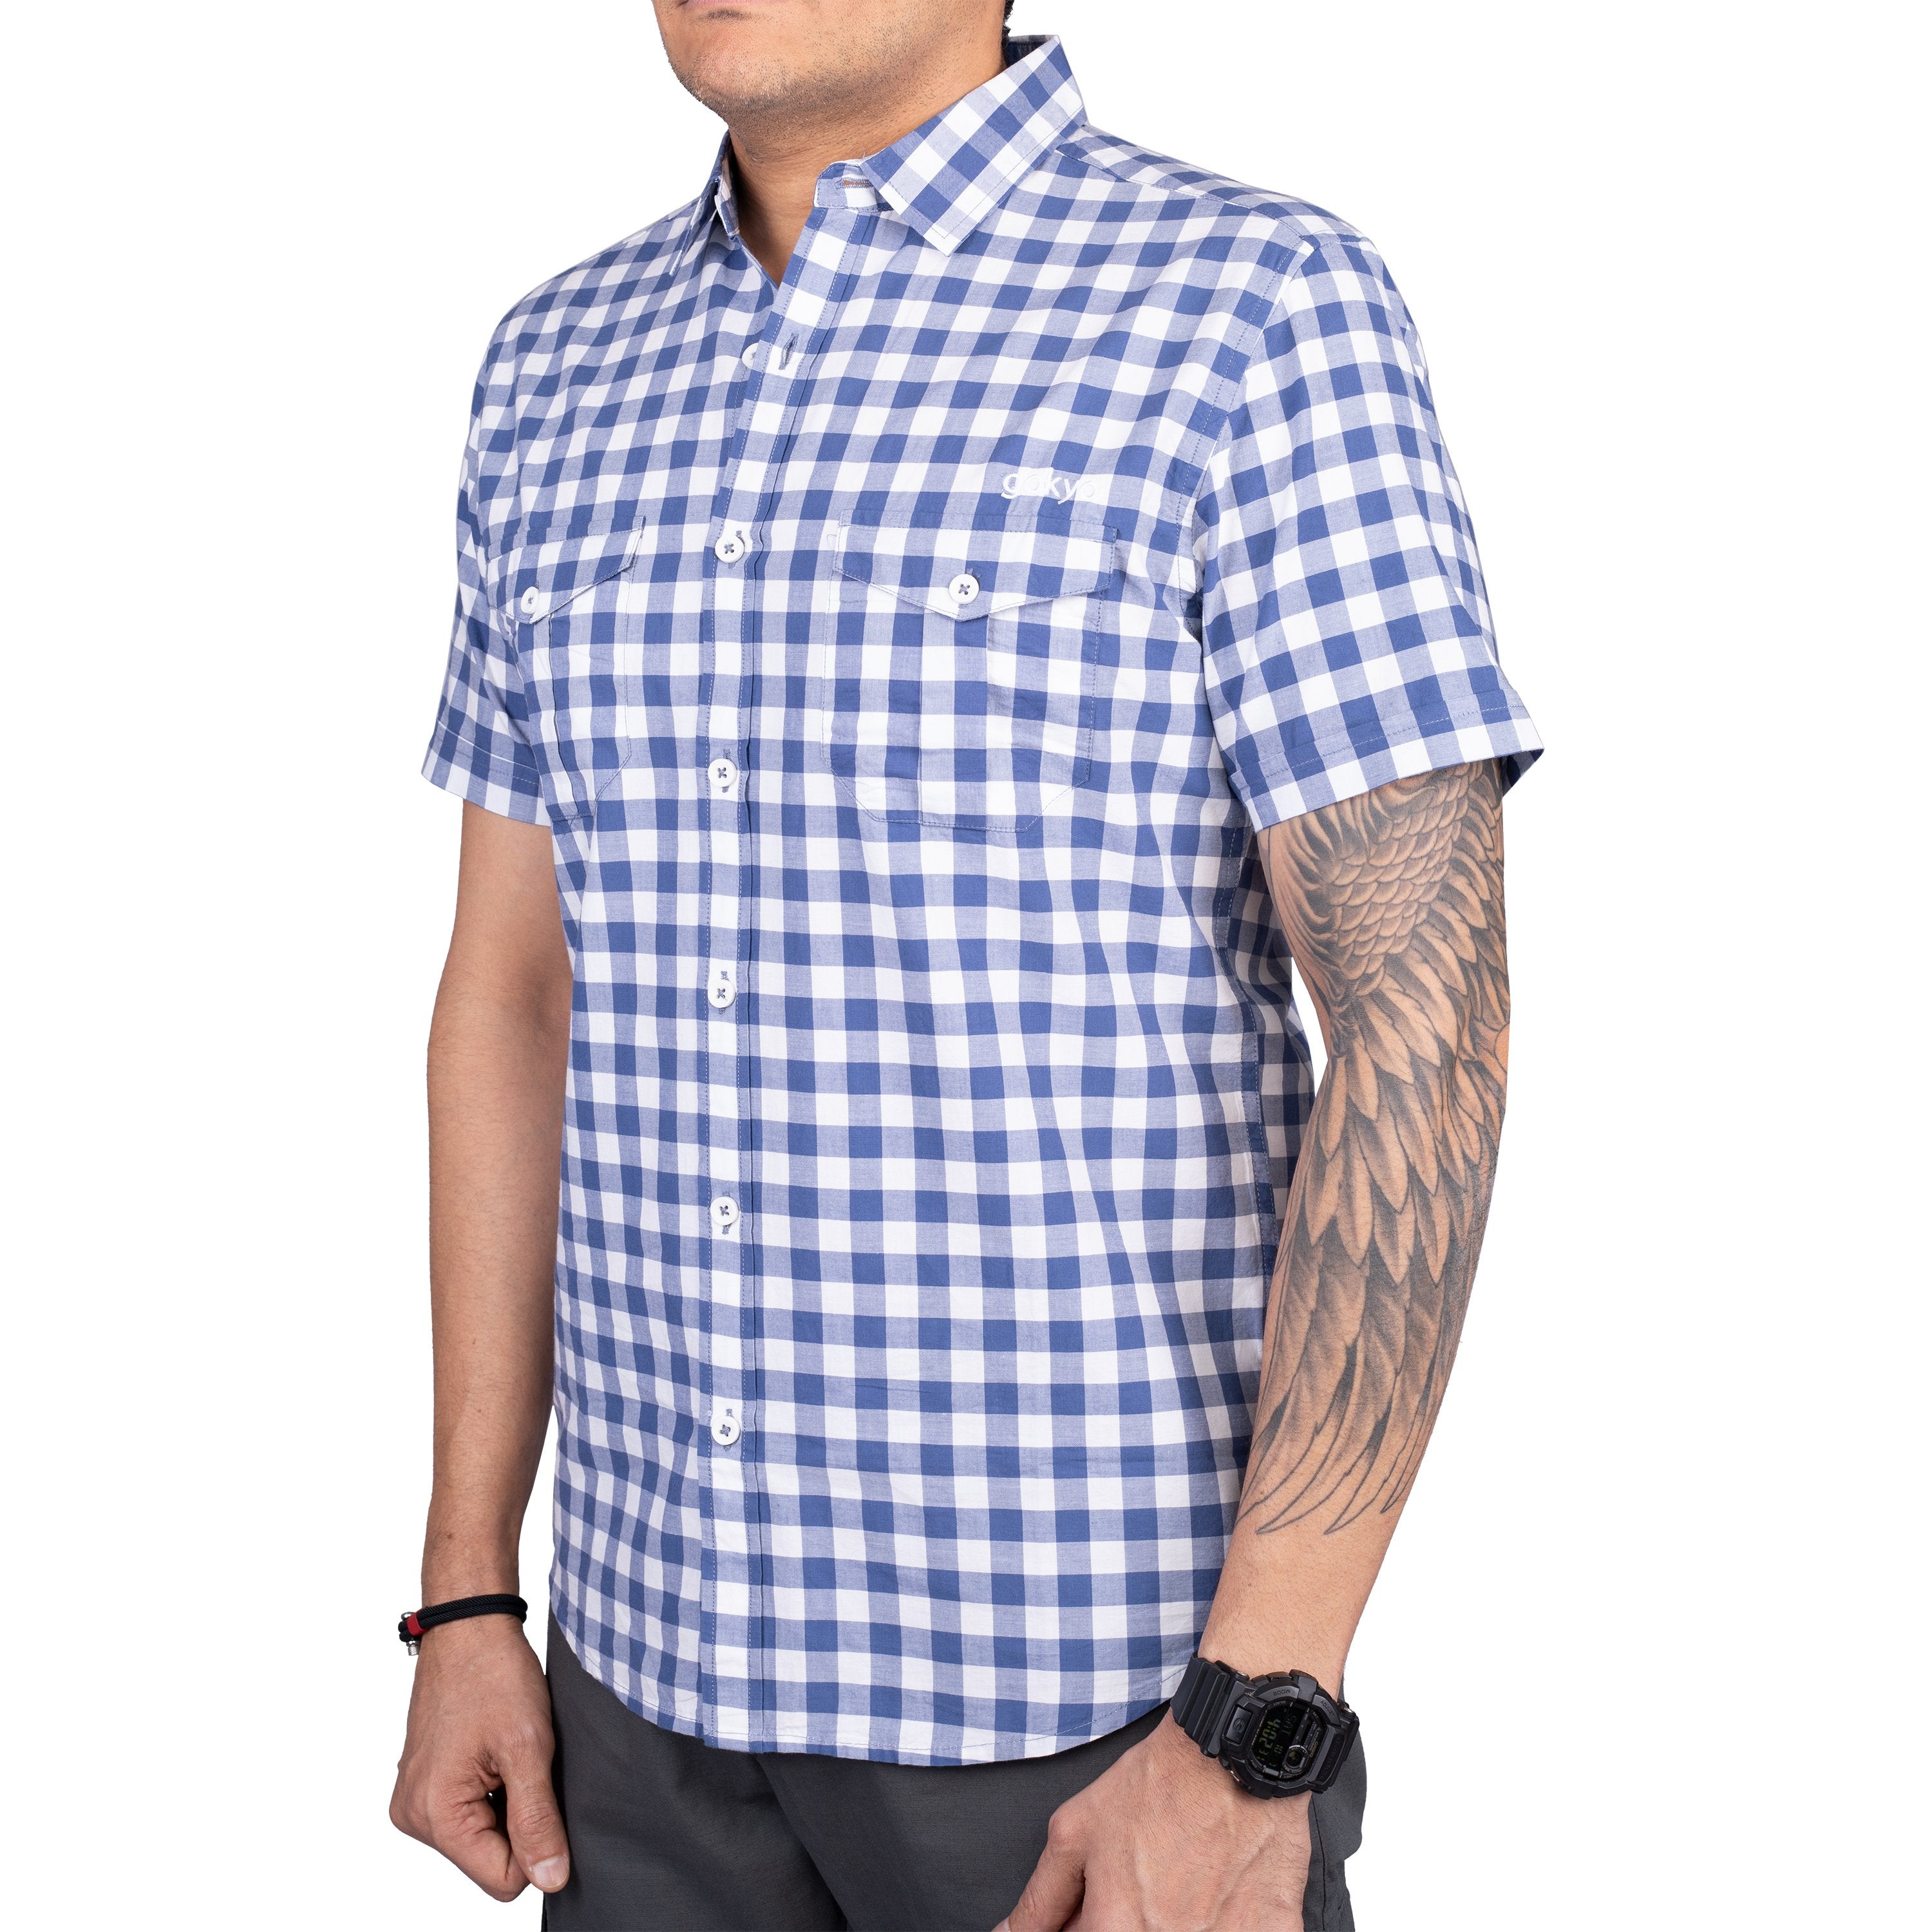 Buy Gokyo Corbett Cargo Half Sleeve Shirt | Shirts at Gokyo Outdoor Clothing & Gear